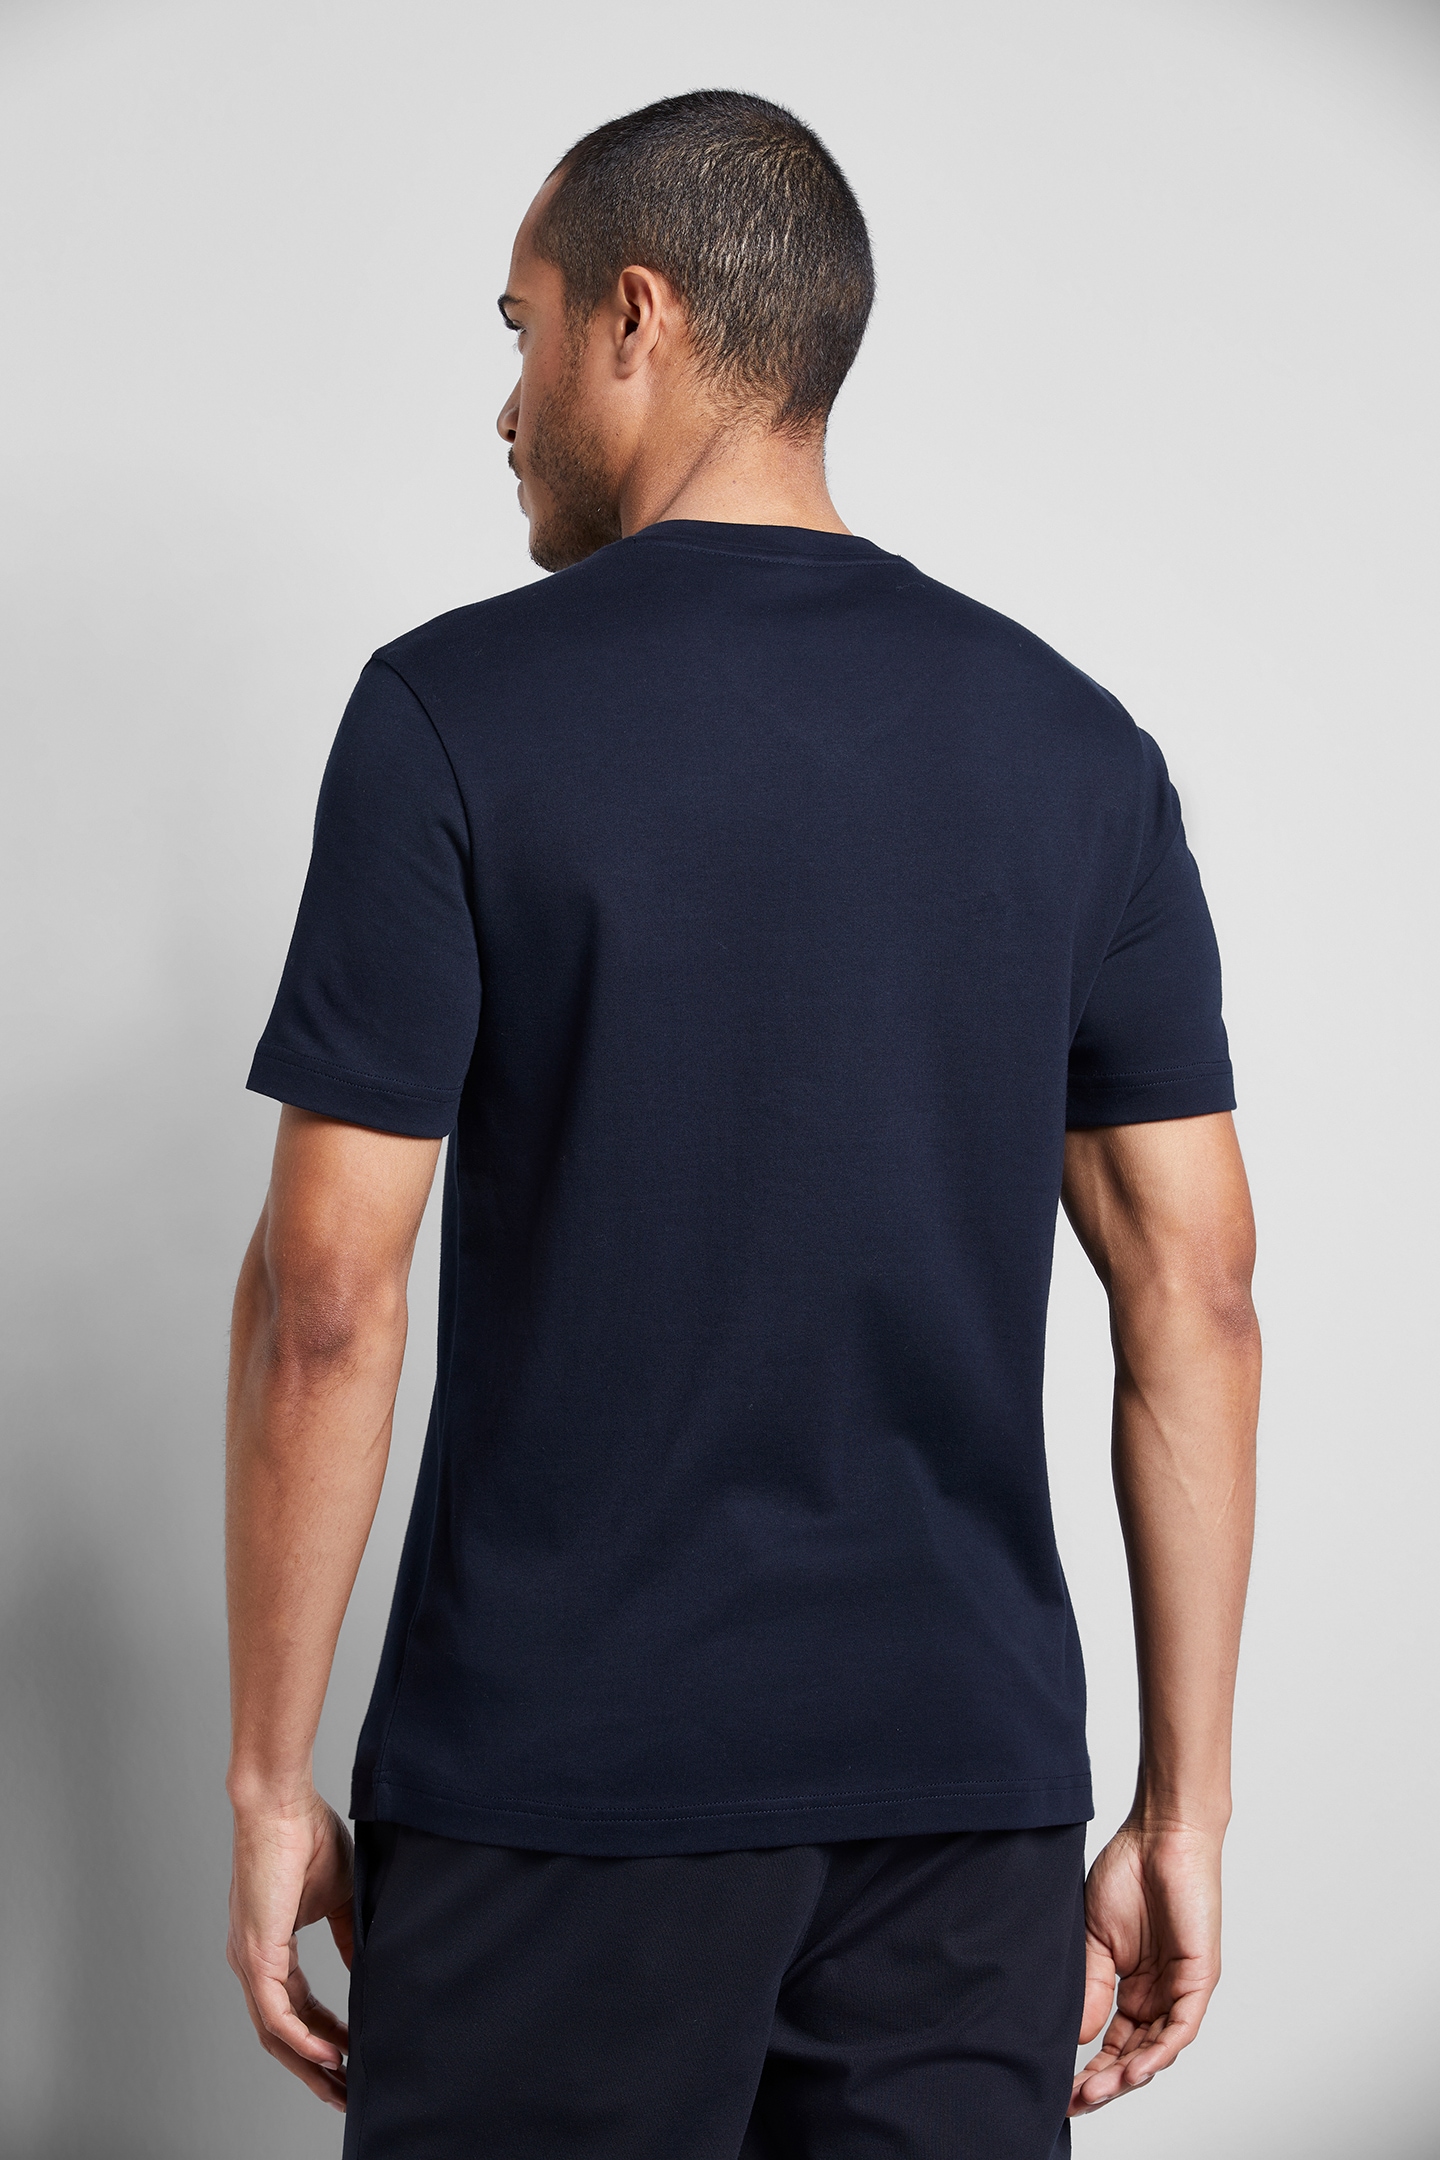 bugatti T-Shirt, OTTO online shoppen mit V-Ausschnitt bei